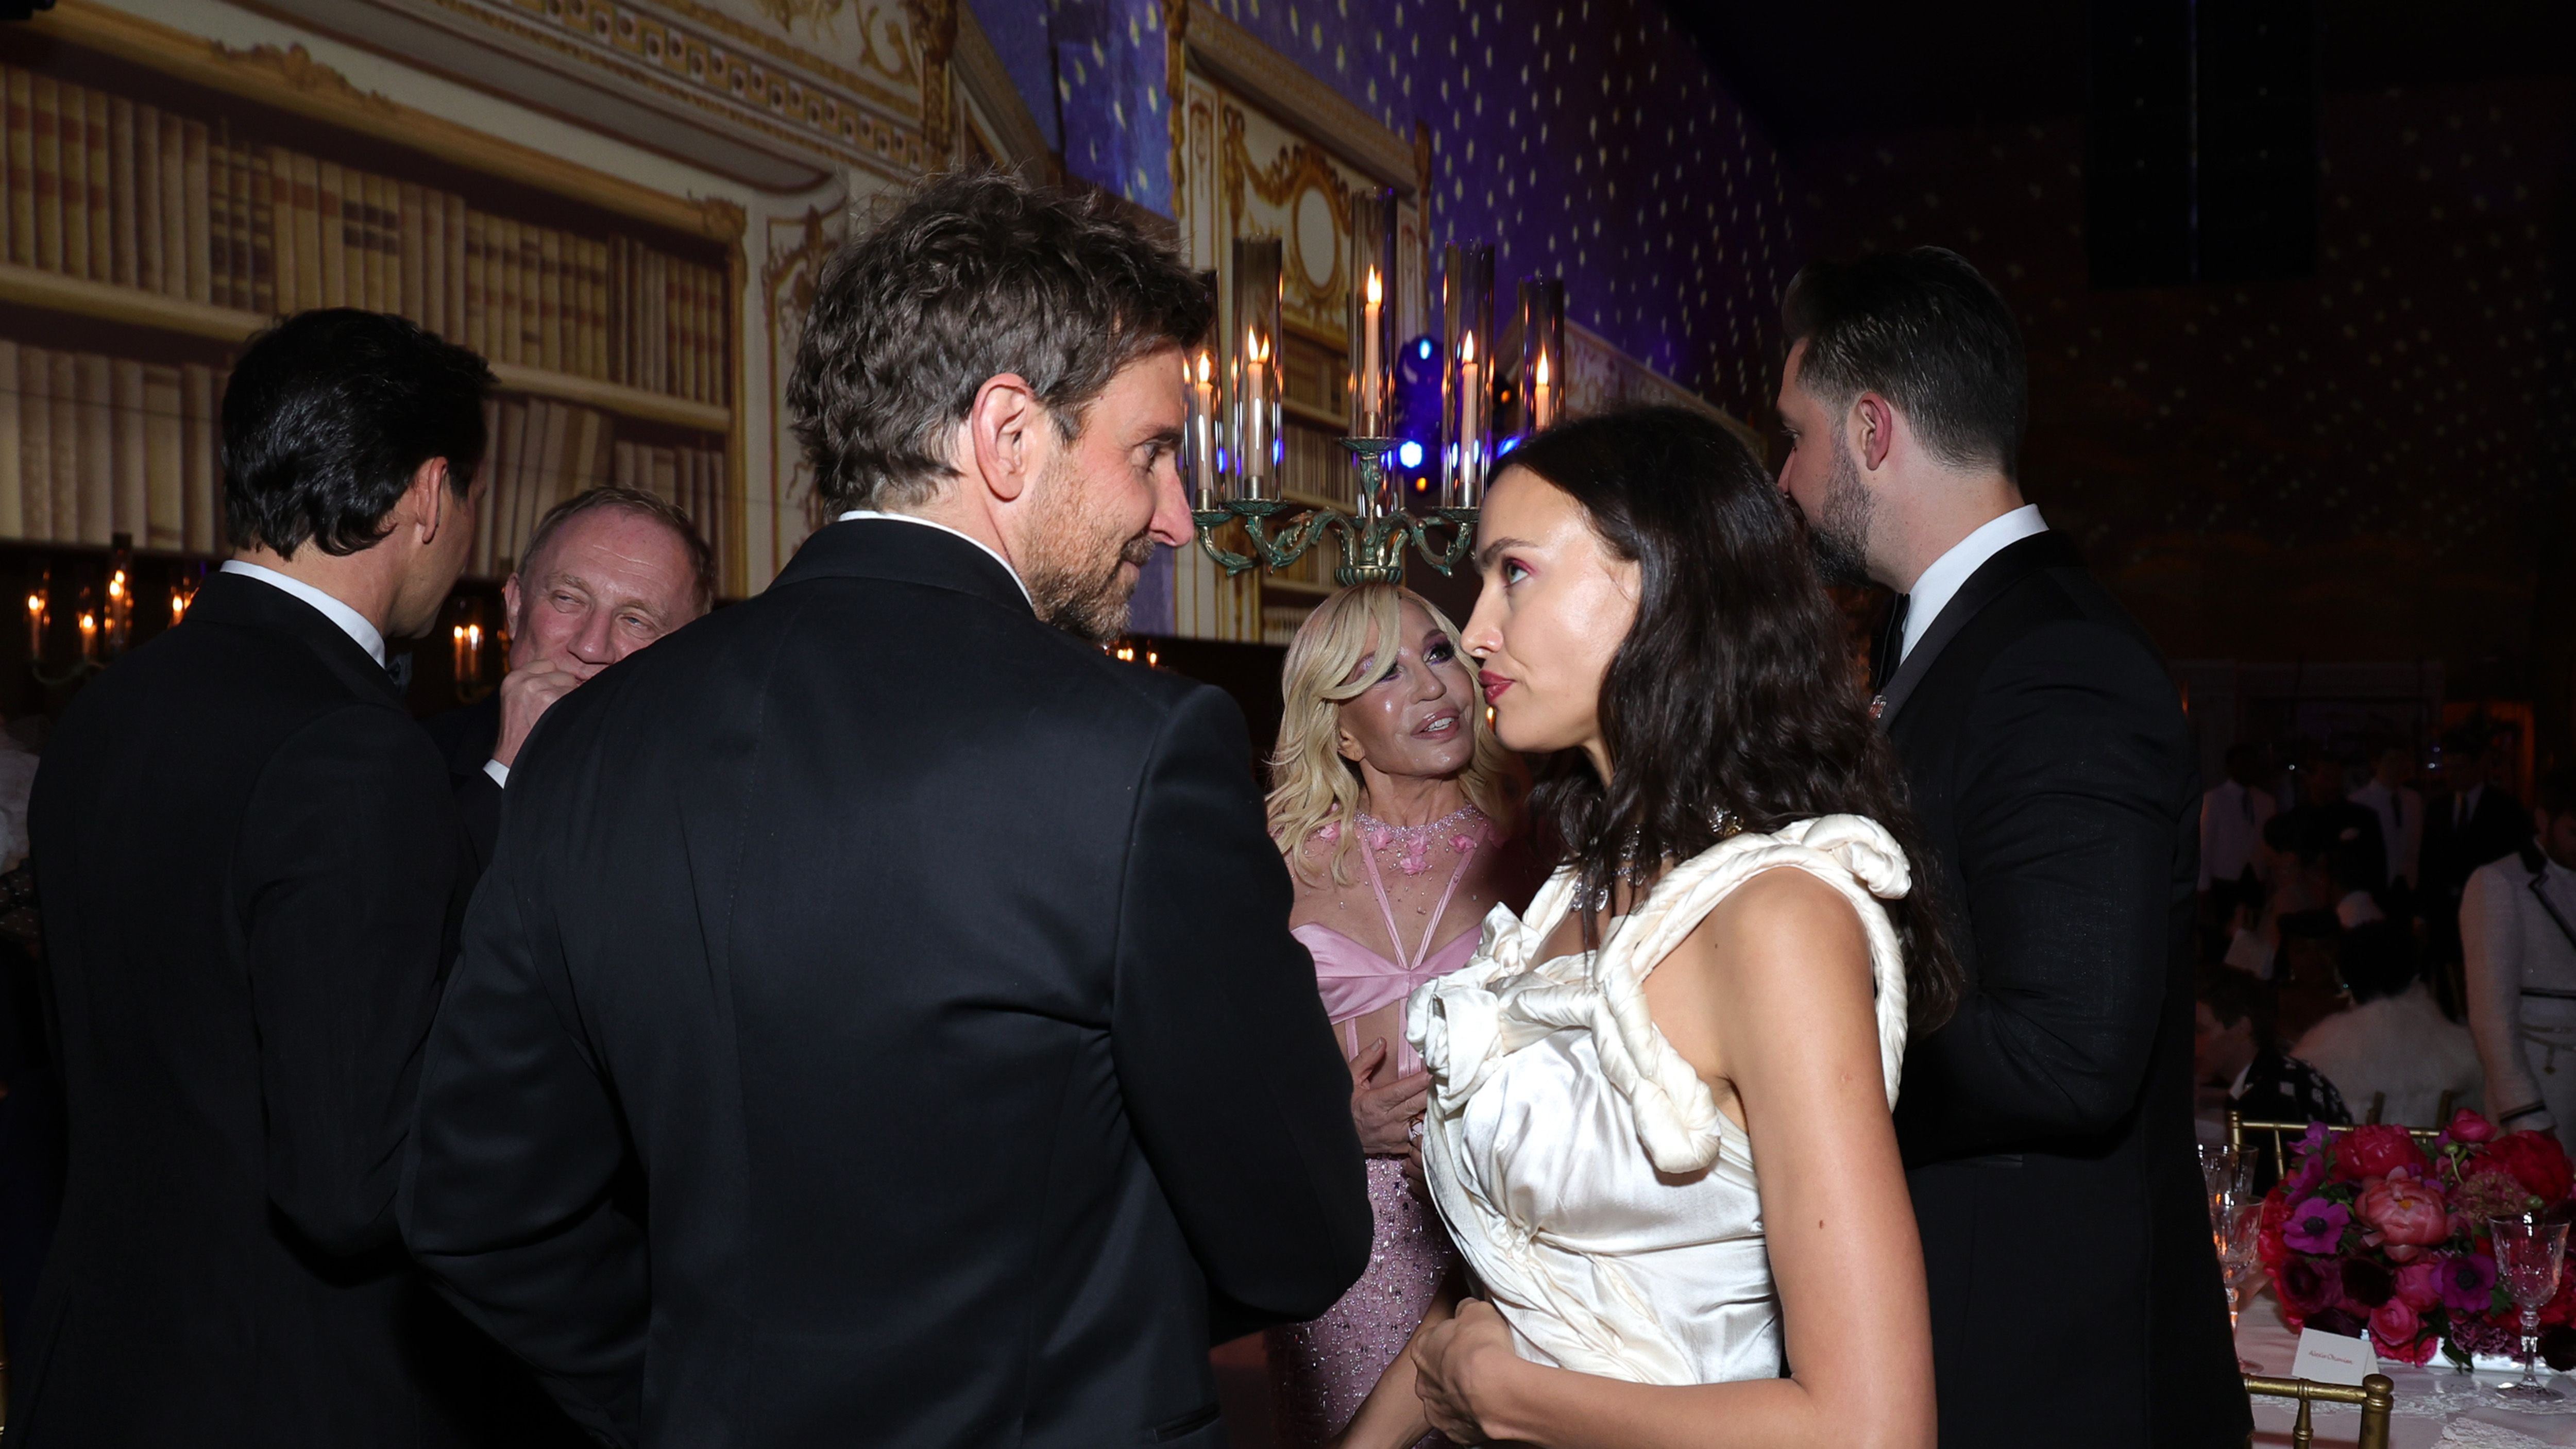 Met Gala 2022: Bradley Cooper reunites with his ex-girlfriend Irina Shayk  at the Met Gala